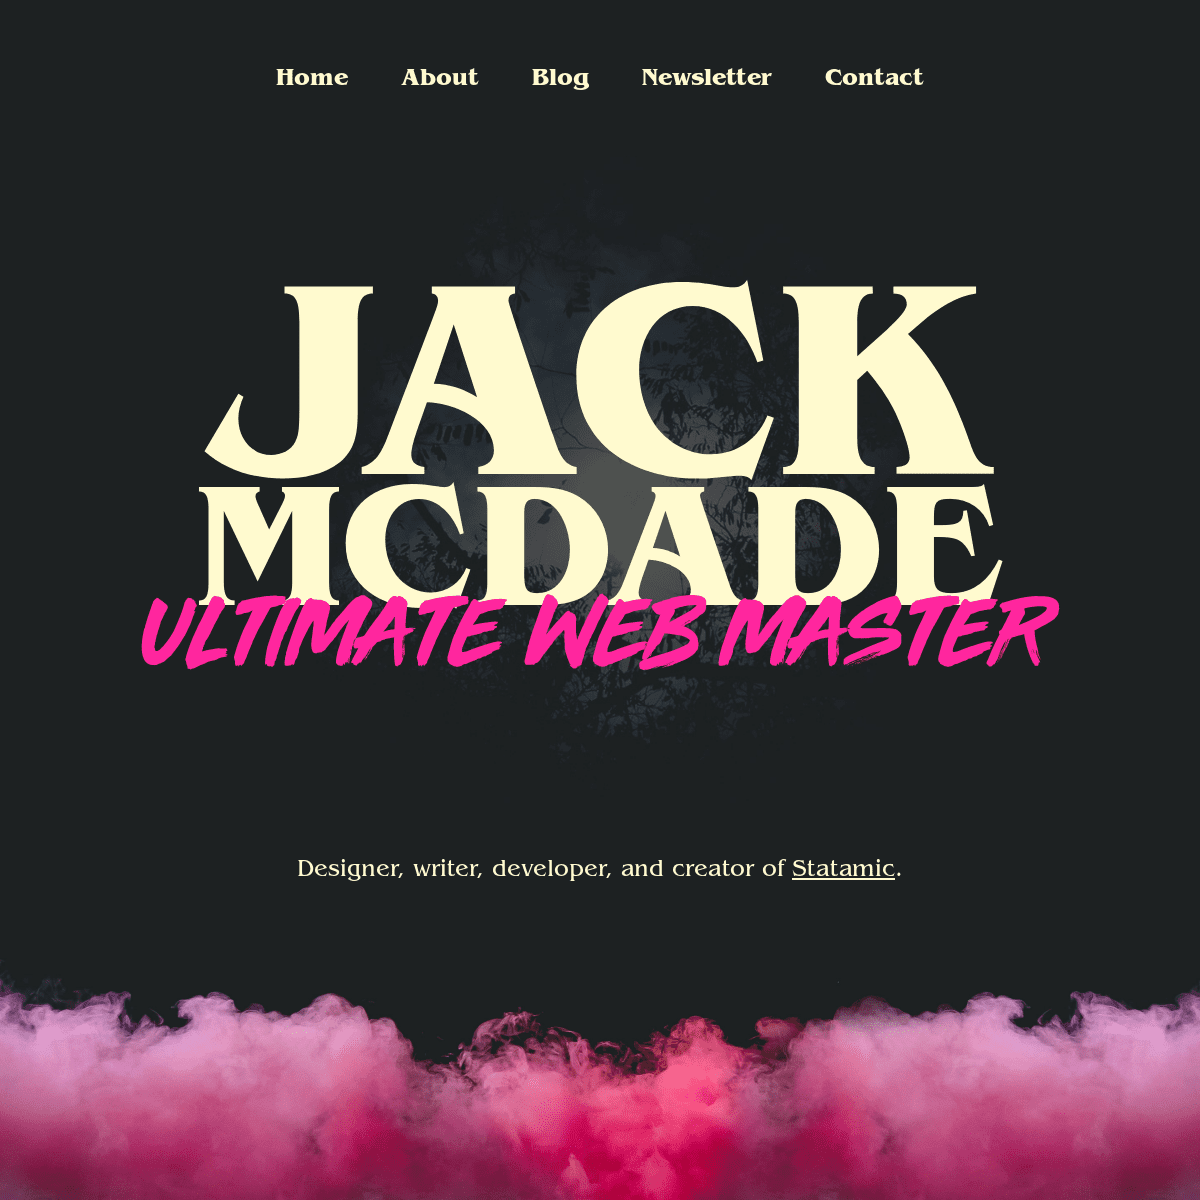 A complete backup of jackmcdade.com